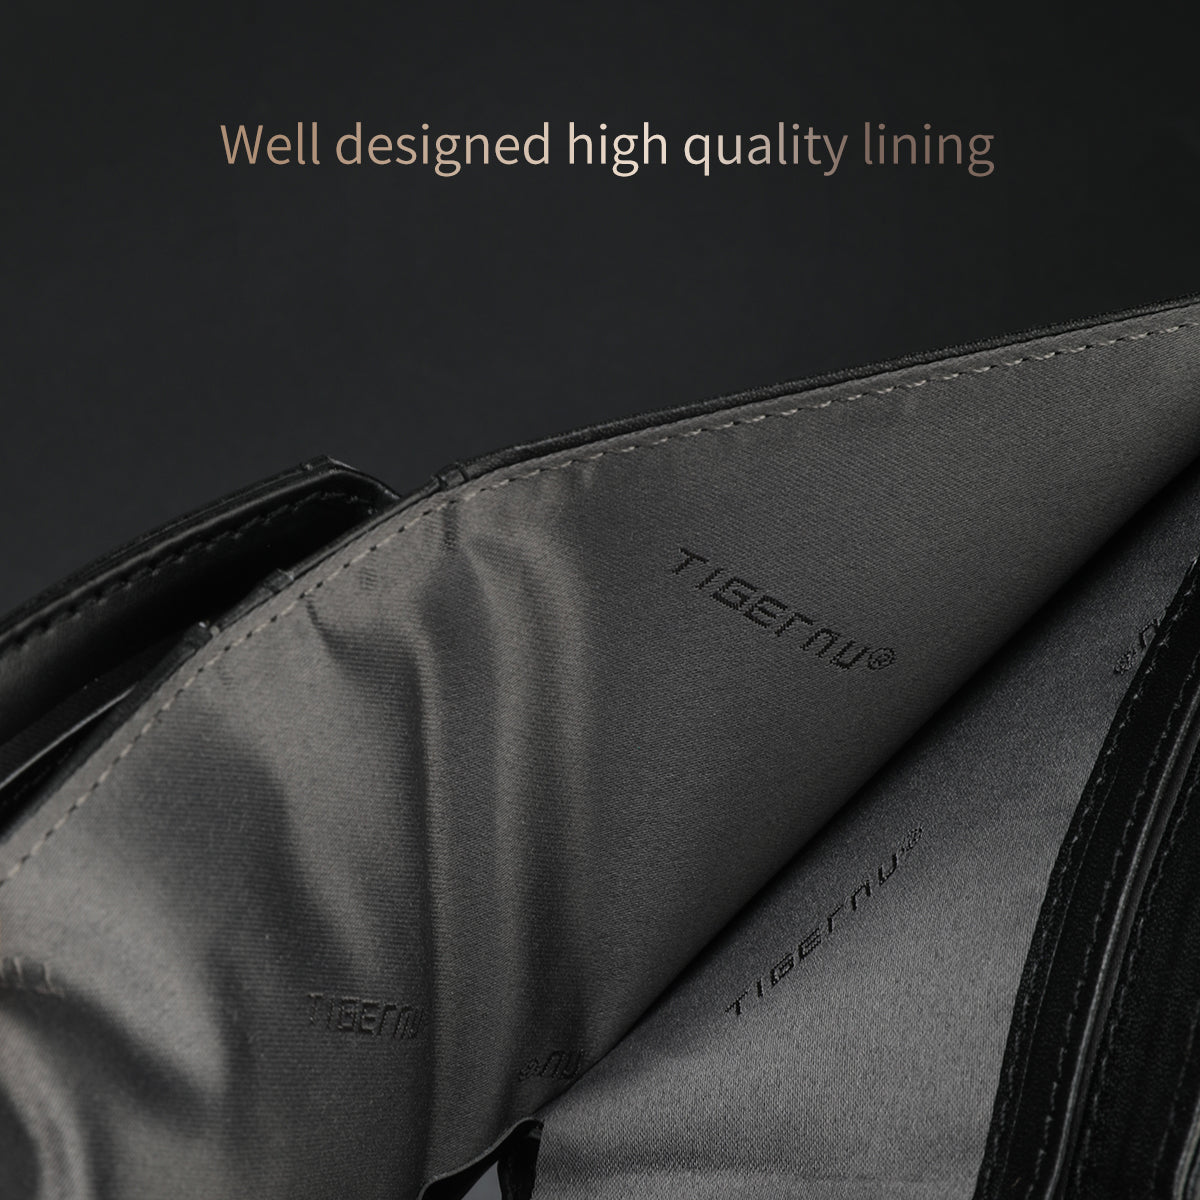 Tigernu T-S8008 Bifold High Quality PU Leather Wallet